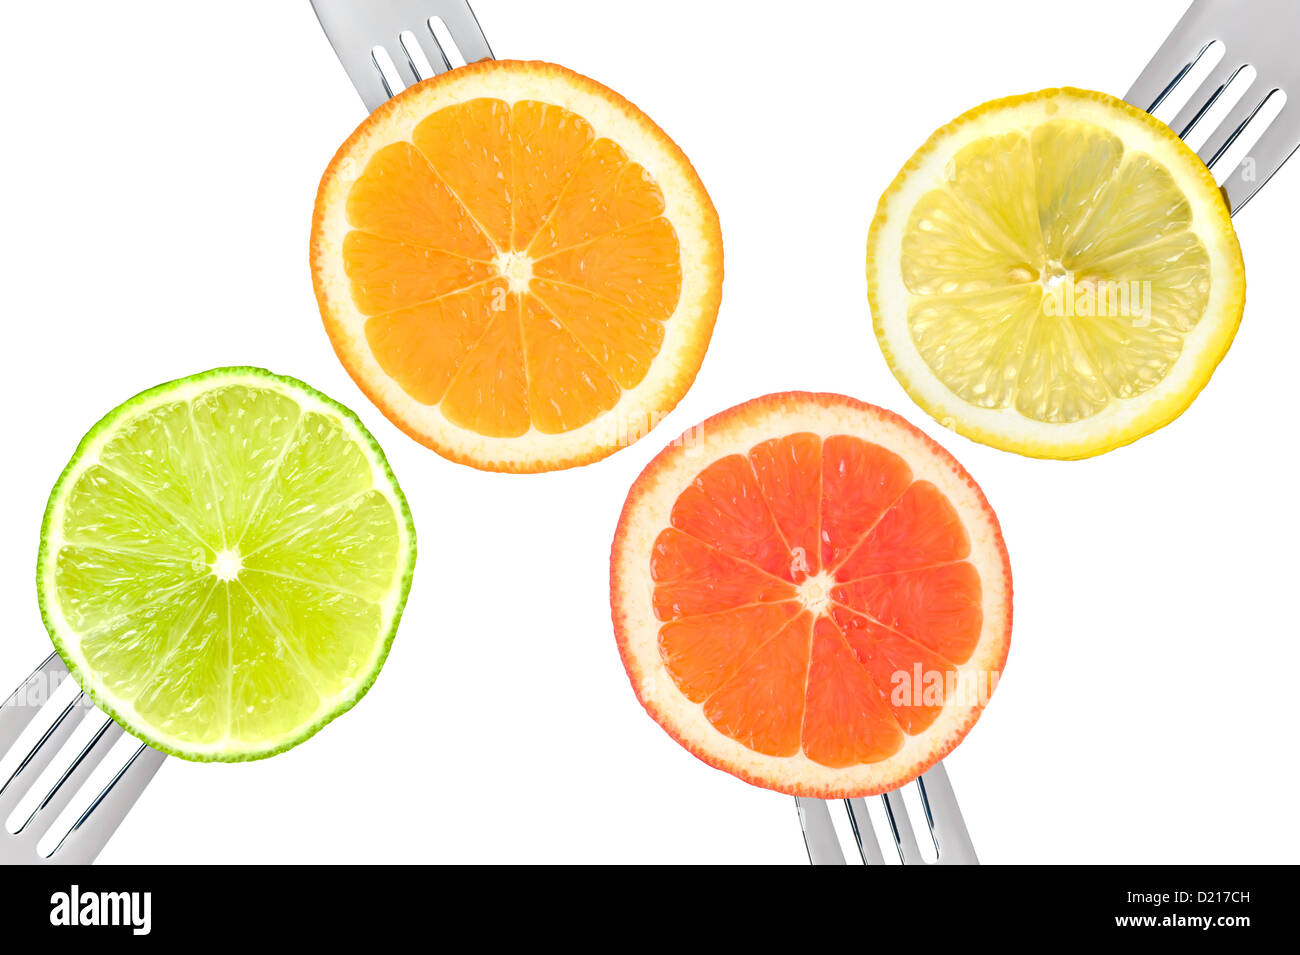 slices of citrus fruits on forks isolated against white background: lime orange grapefruit lemon Stock Photo